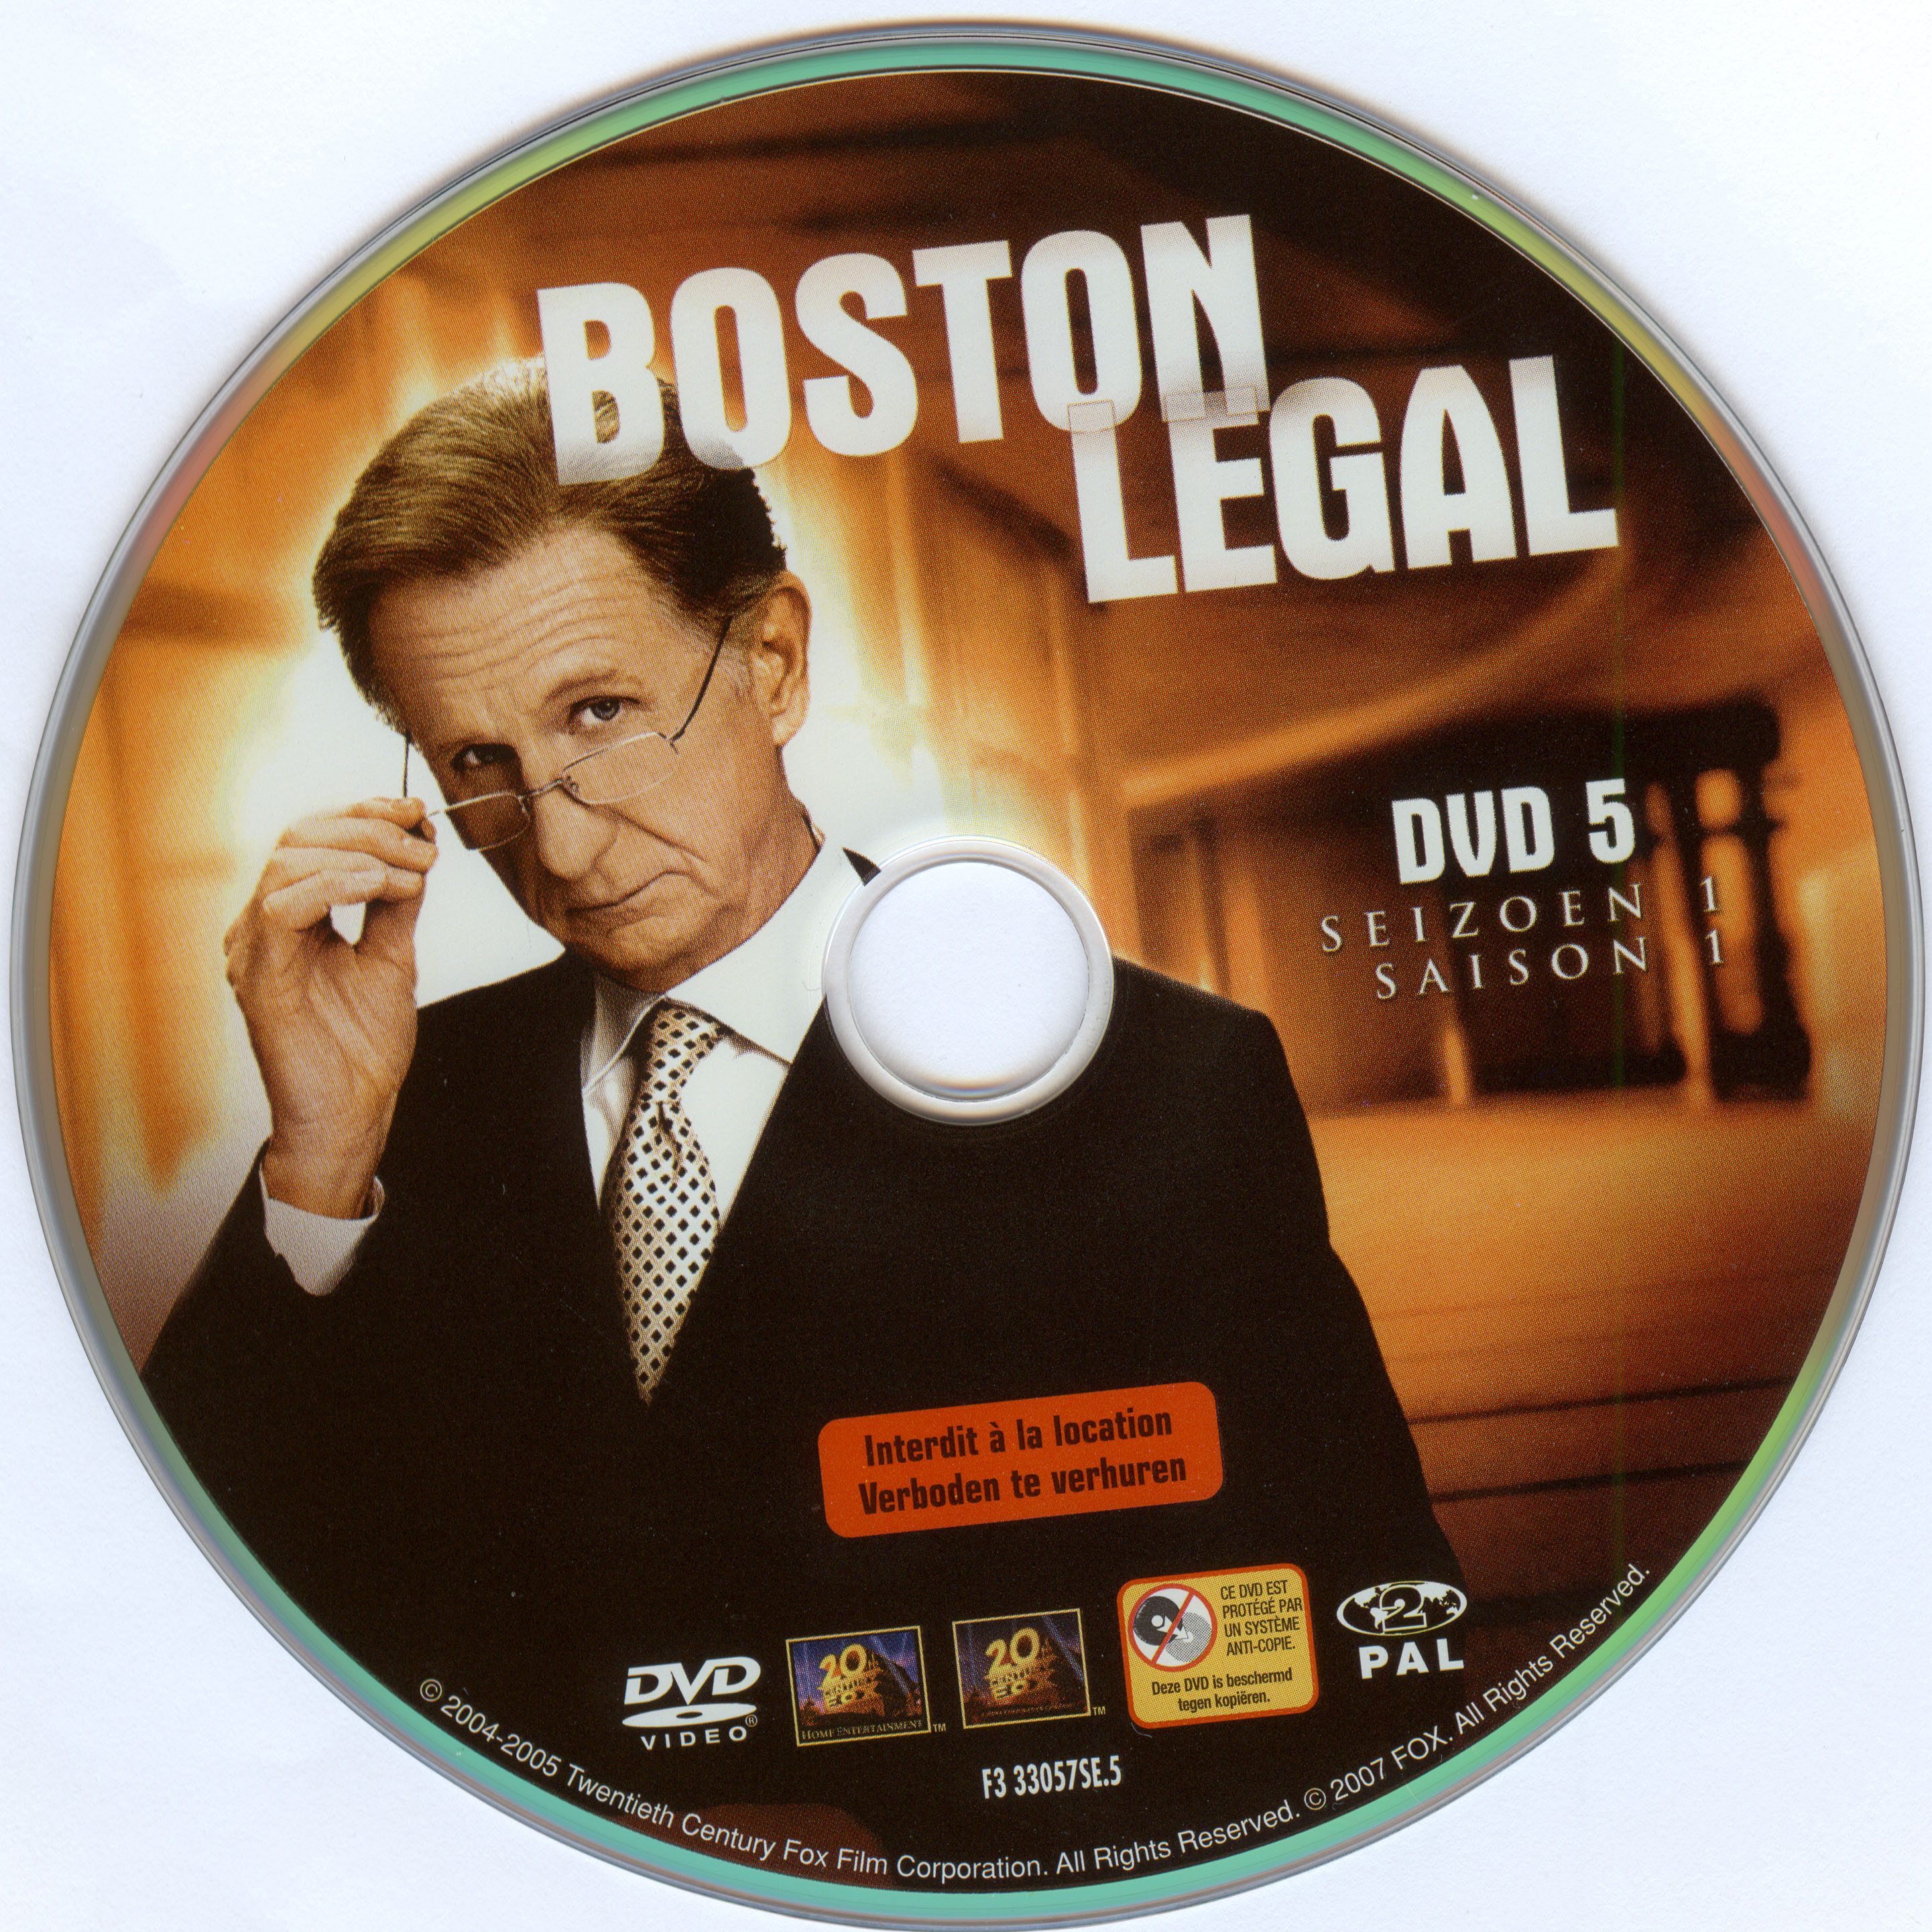 Boston legal - Boston justice Saison 1 DISC 5